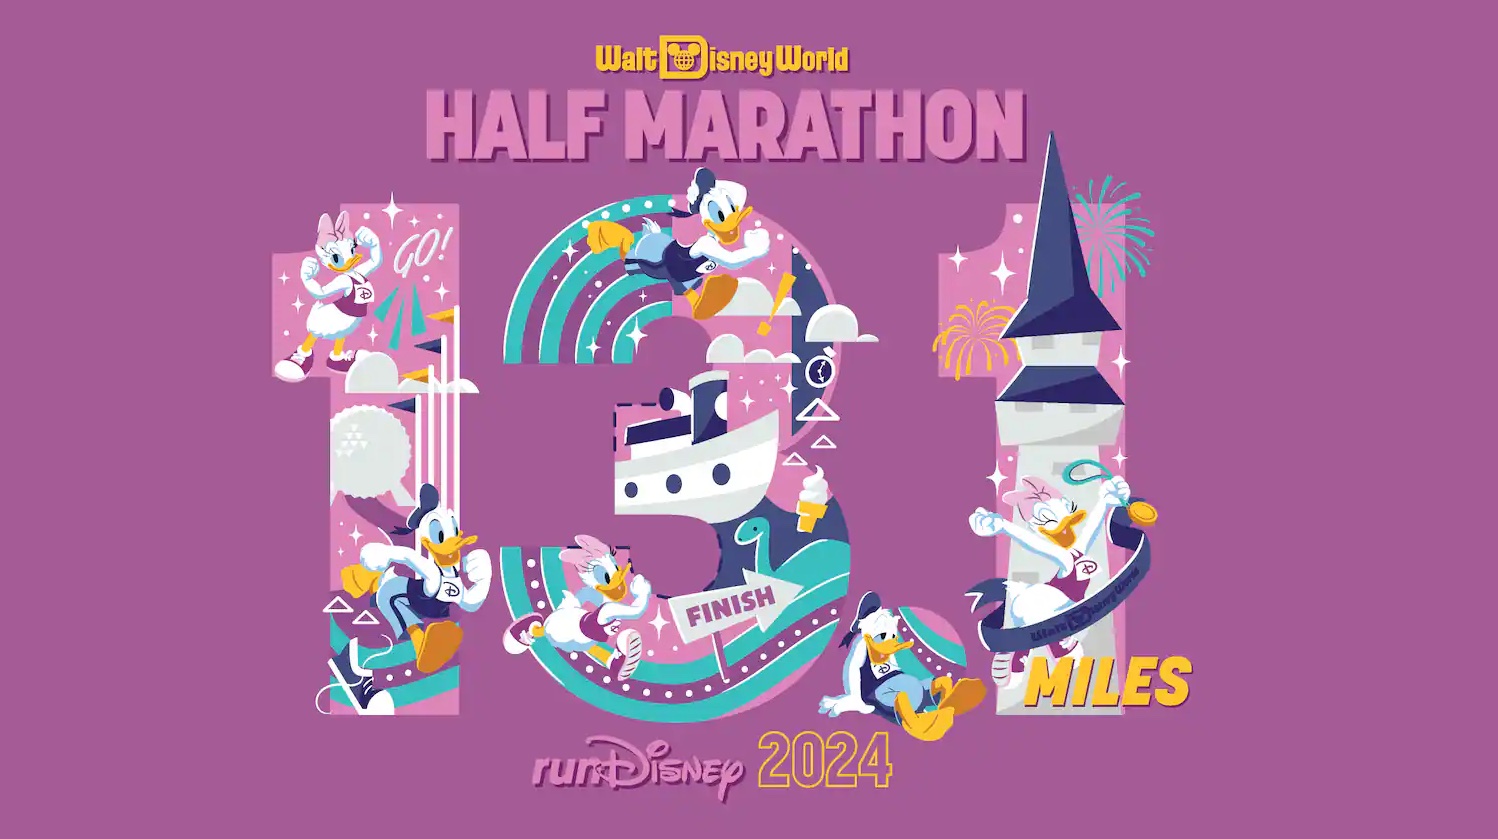 Themes Revealed for the 2024 Walt Disney World Marathon Weekend